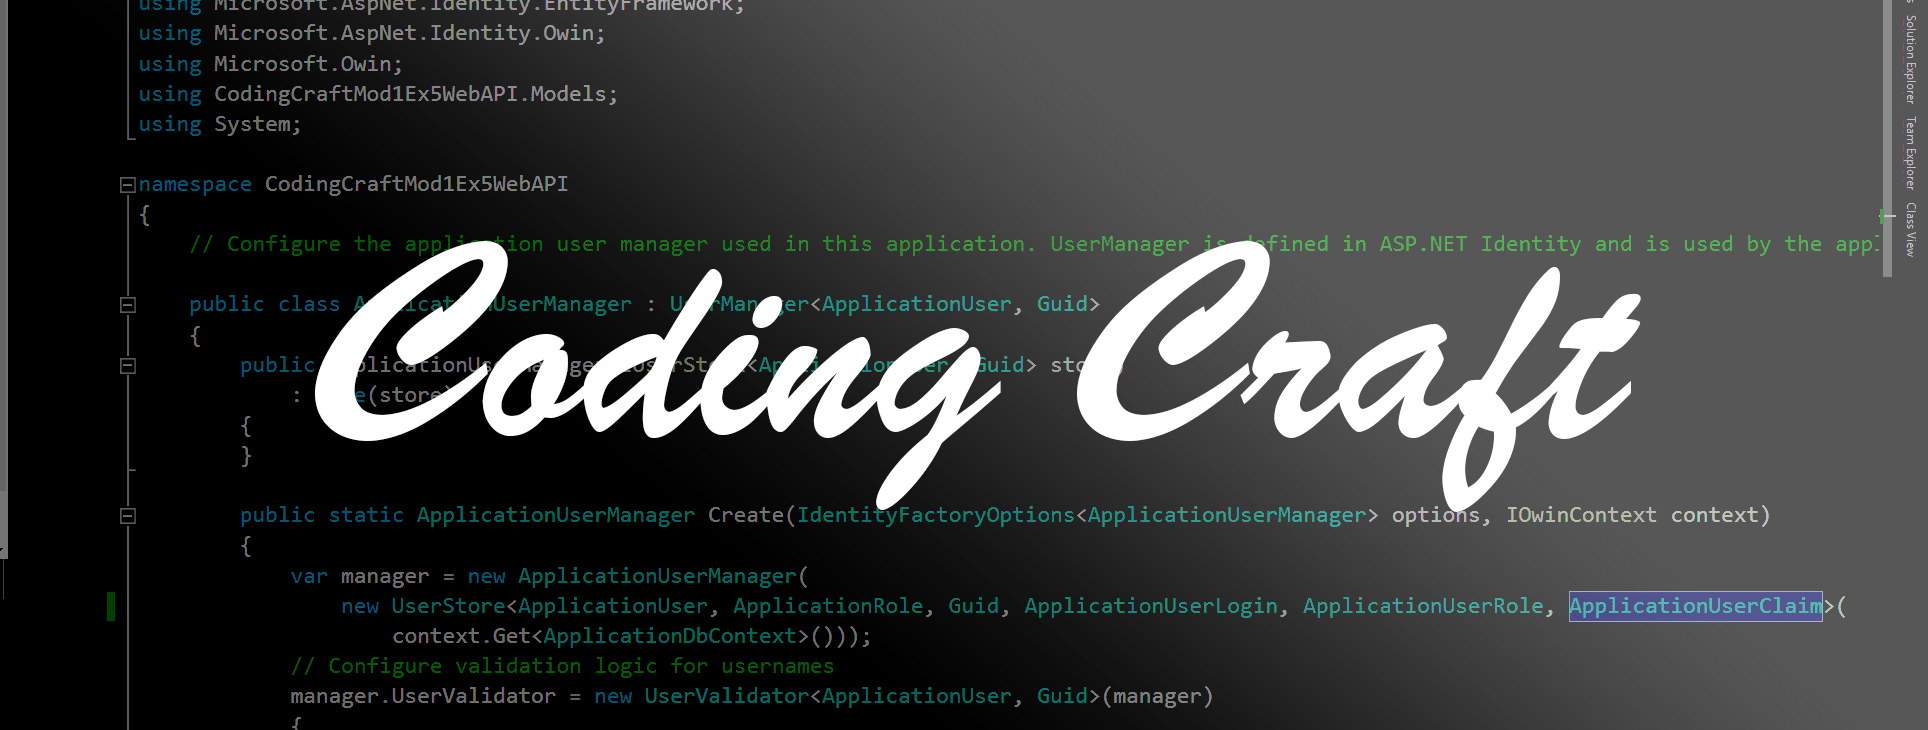 Cursos Coding Craft